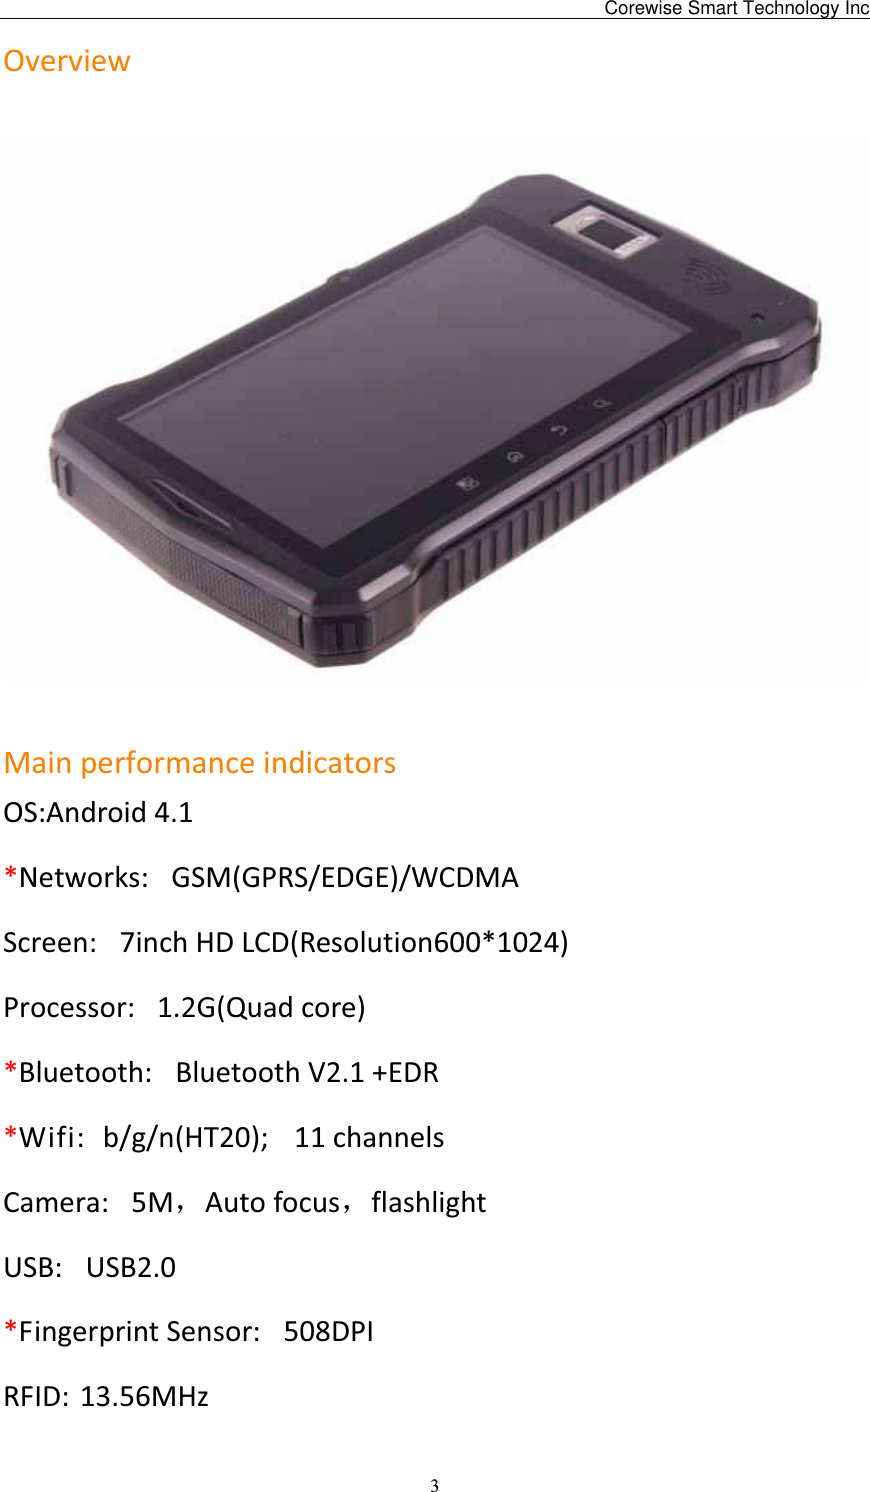                                                3Overview MainperformanceindicatorsOS:Android4.1*Networks: GSM(GPRS/EDGE)/WCDMA Screen: 7inchHDLCD(Resolution600*1024)Processor: 1.2G(Quadcore)*Bluetooth: BluetoothV2.1+EDR*Wifi: b/g/n(HT20);11channelsCamera: 5MˈAutofocusˈflashlightUSB: USB2.0*FingerprintSensor: 508DPIRFID: 13.56MHz Corewise Smart Technology Inc